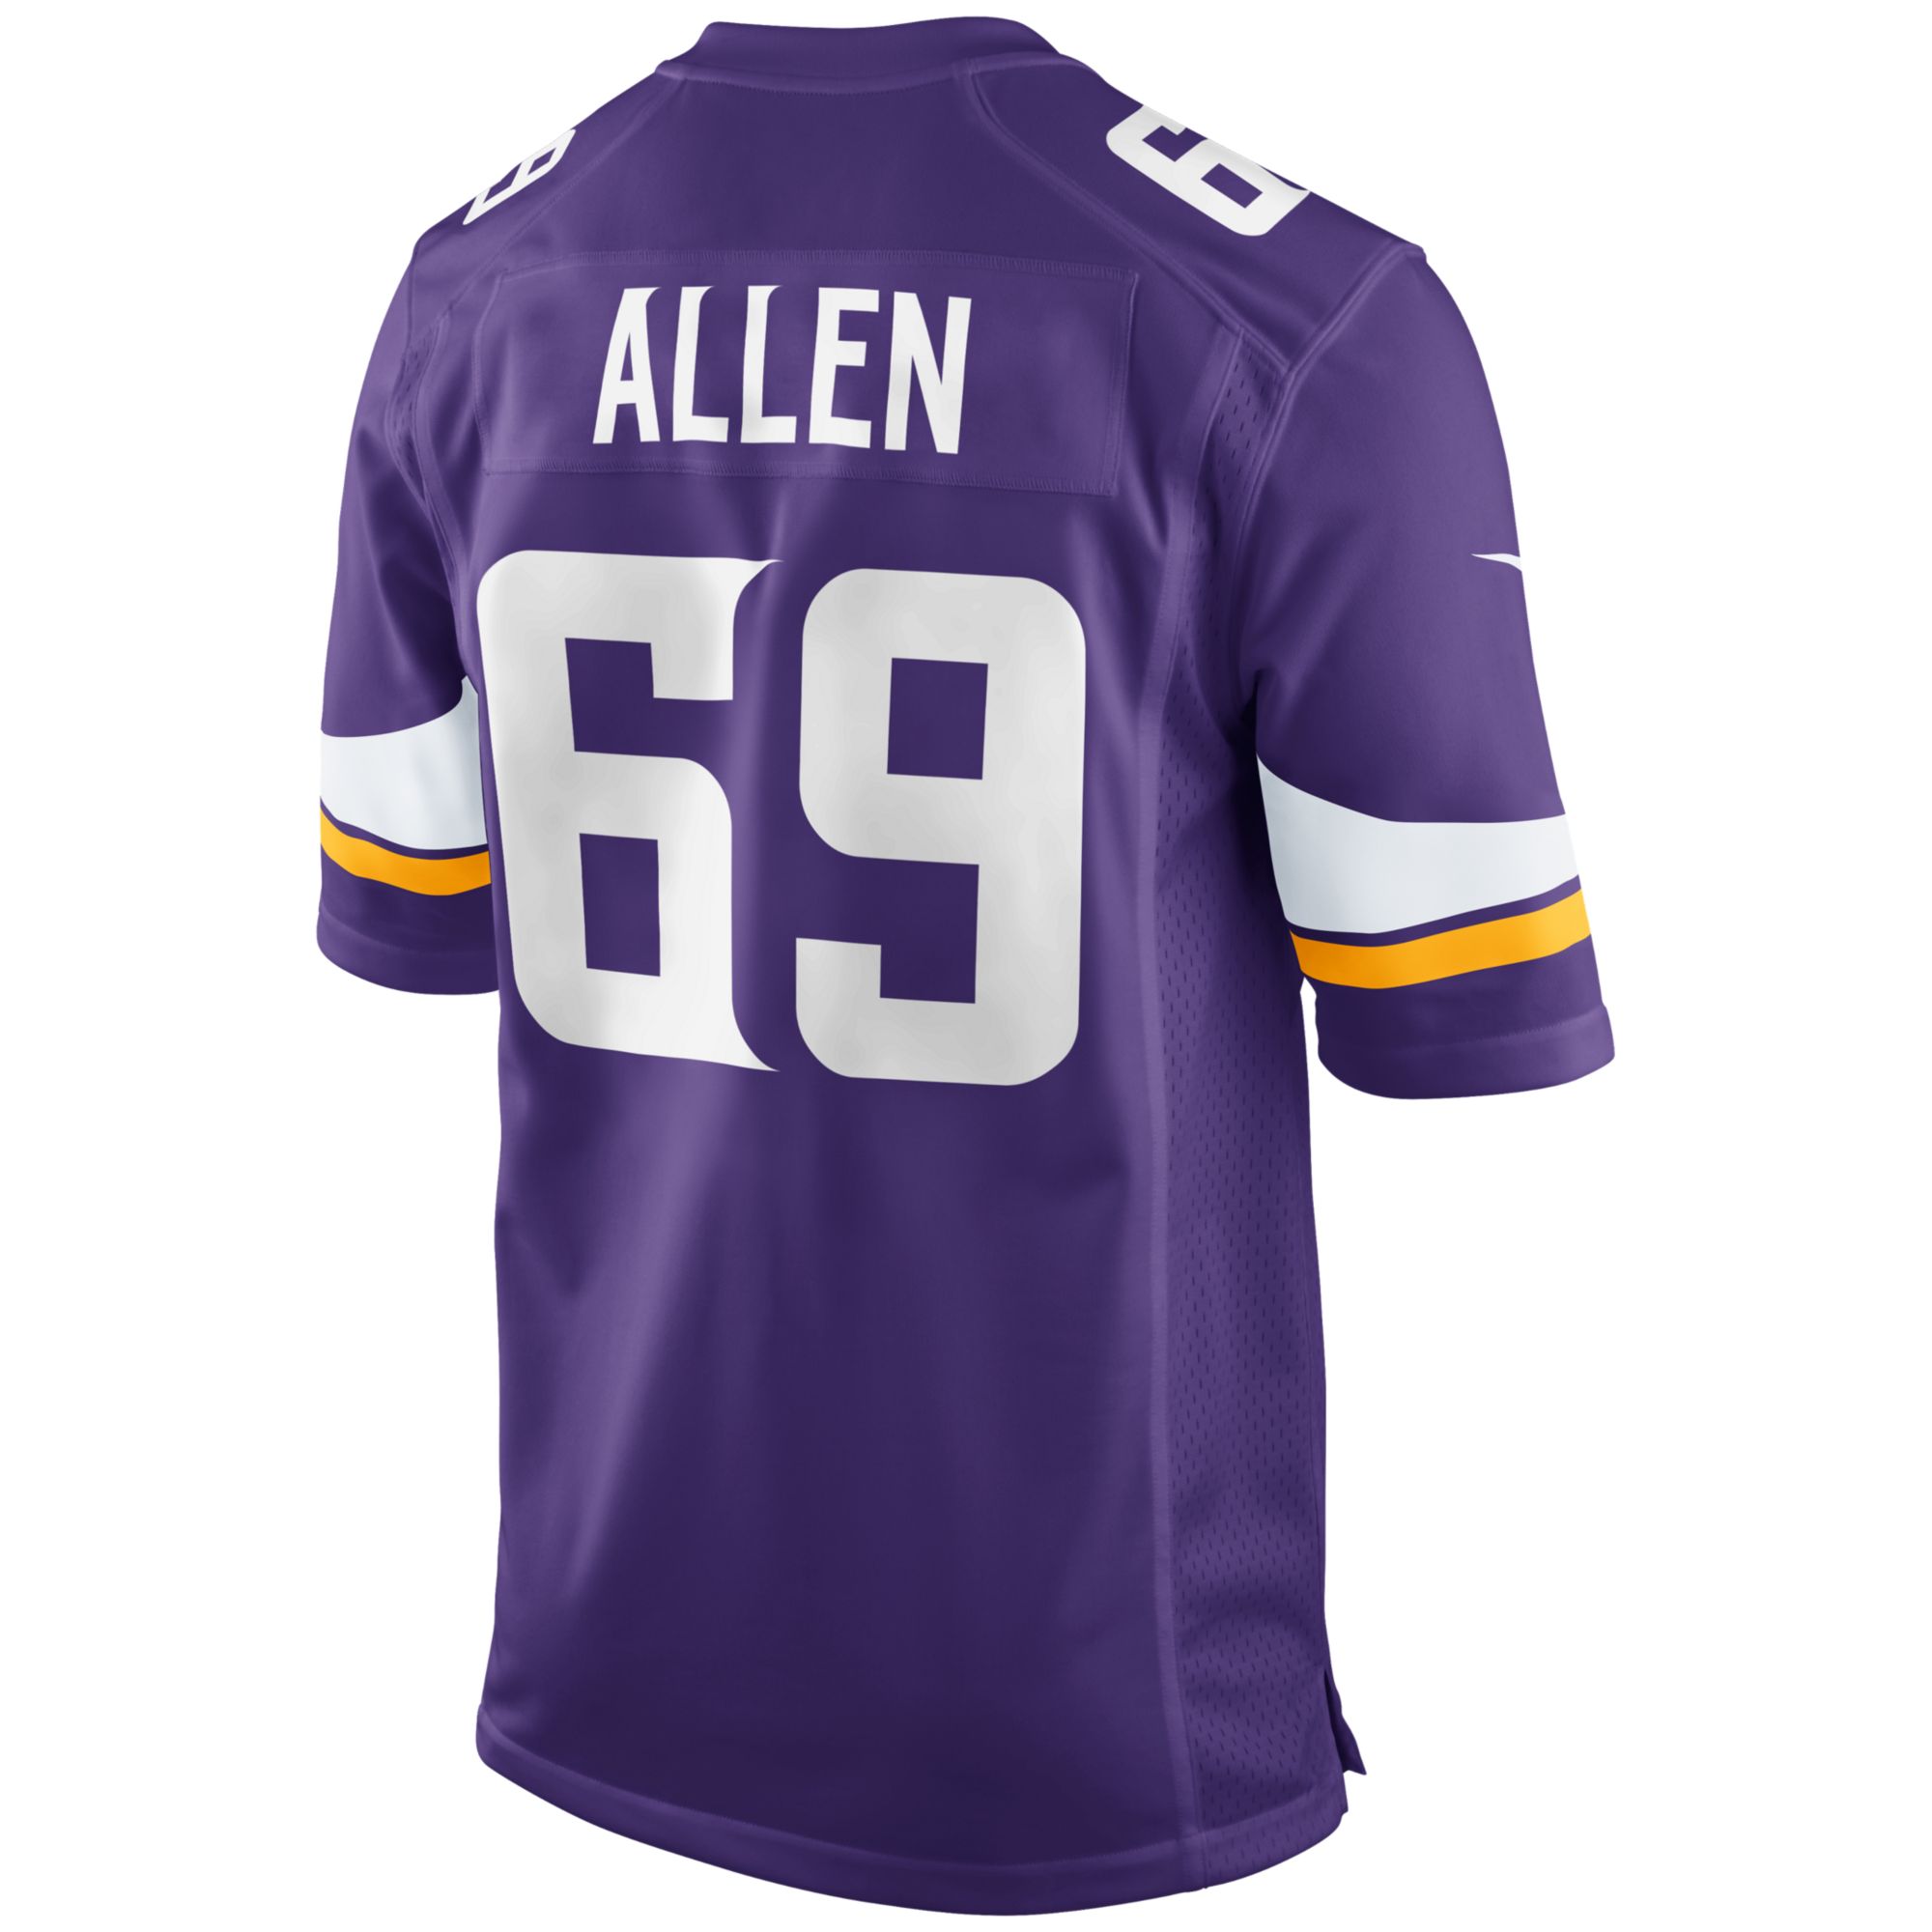 Nike Nike Minnesota Vikings Jared Allen Men's Game Jersey in Purple for